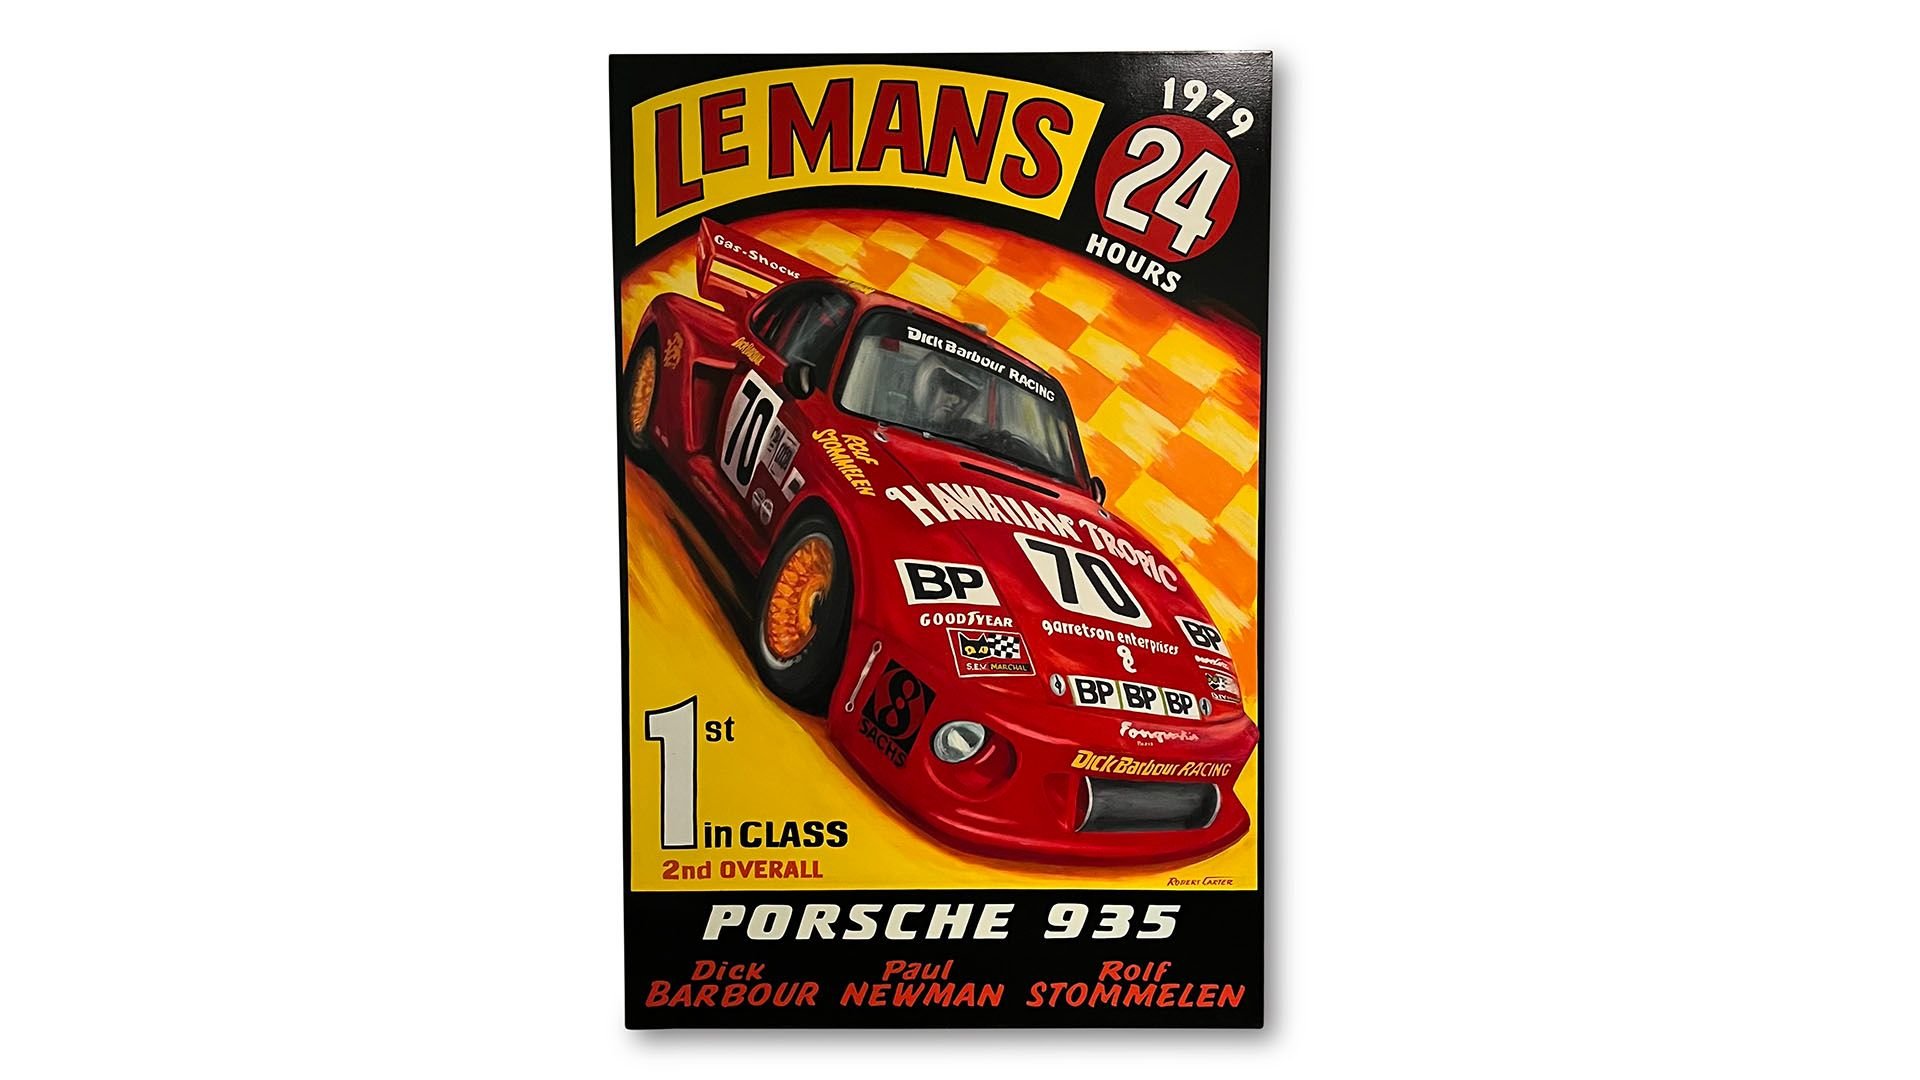 For Sale 1979 24 Hours of Le Mans Dick Barbour Racing Porsche 935 - Original Painting